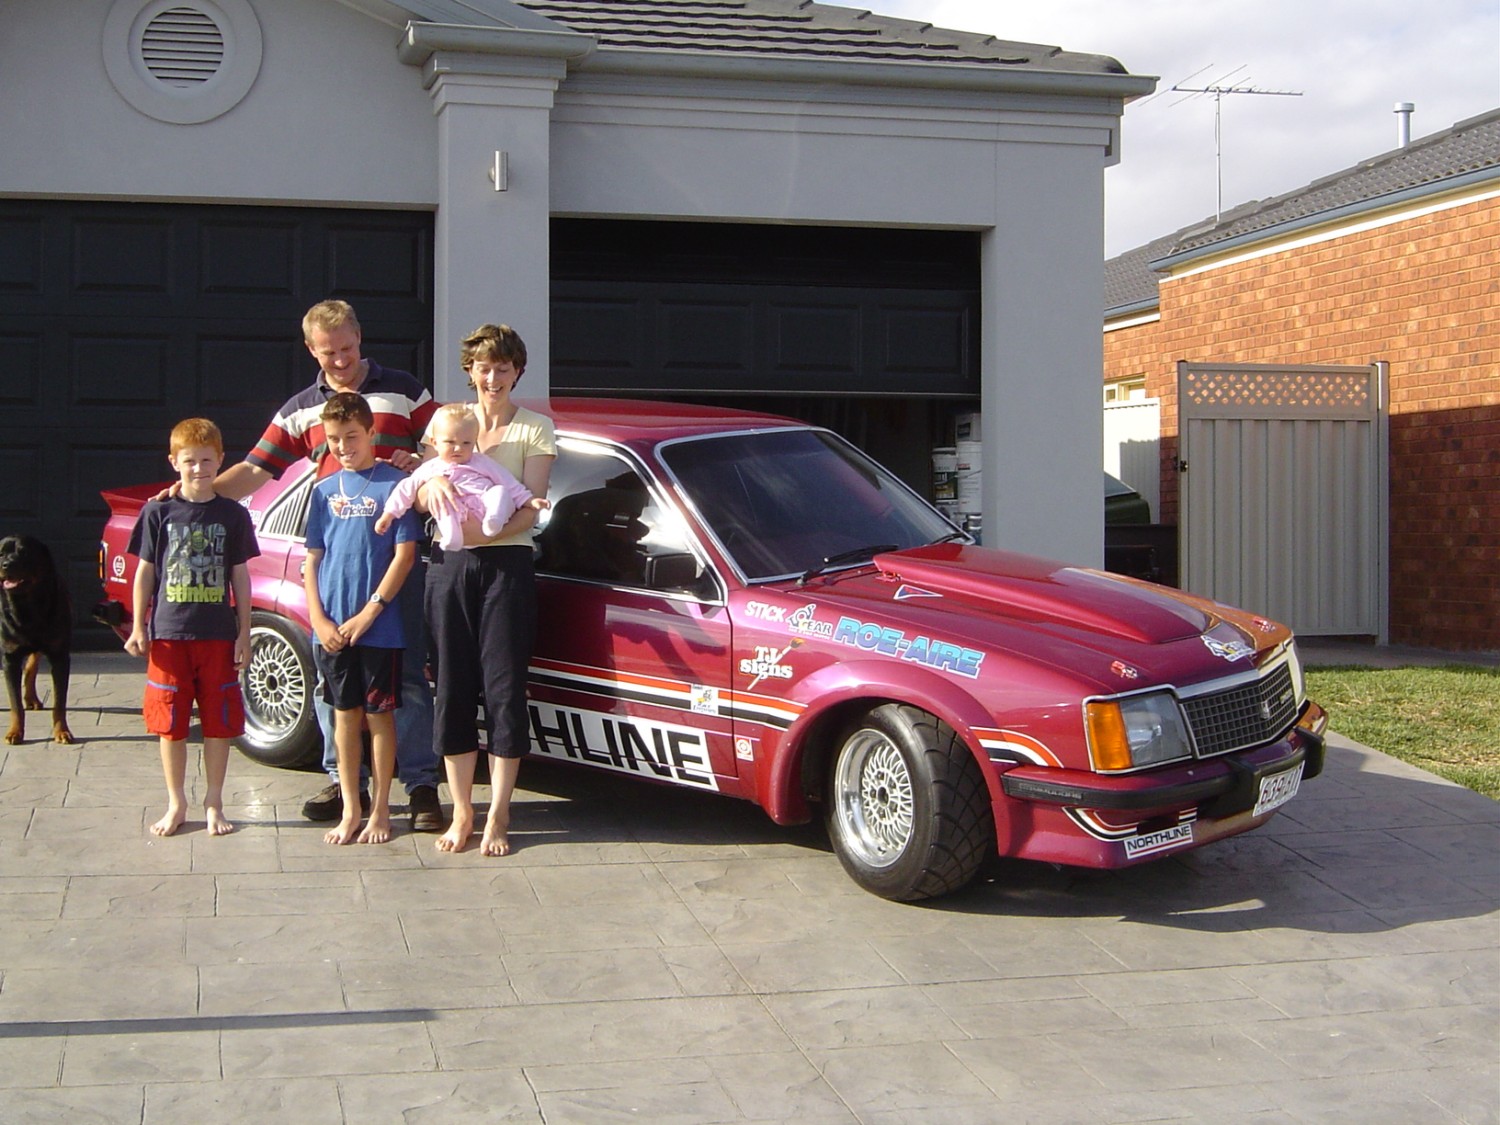 1981 Holden Dealer Team Commodore